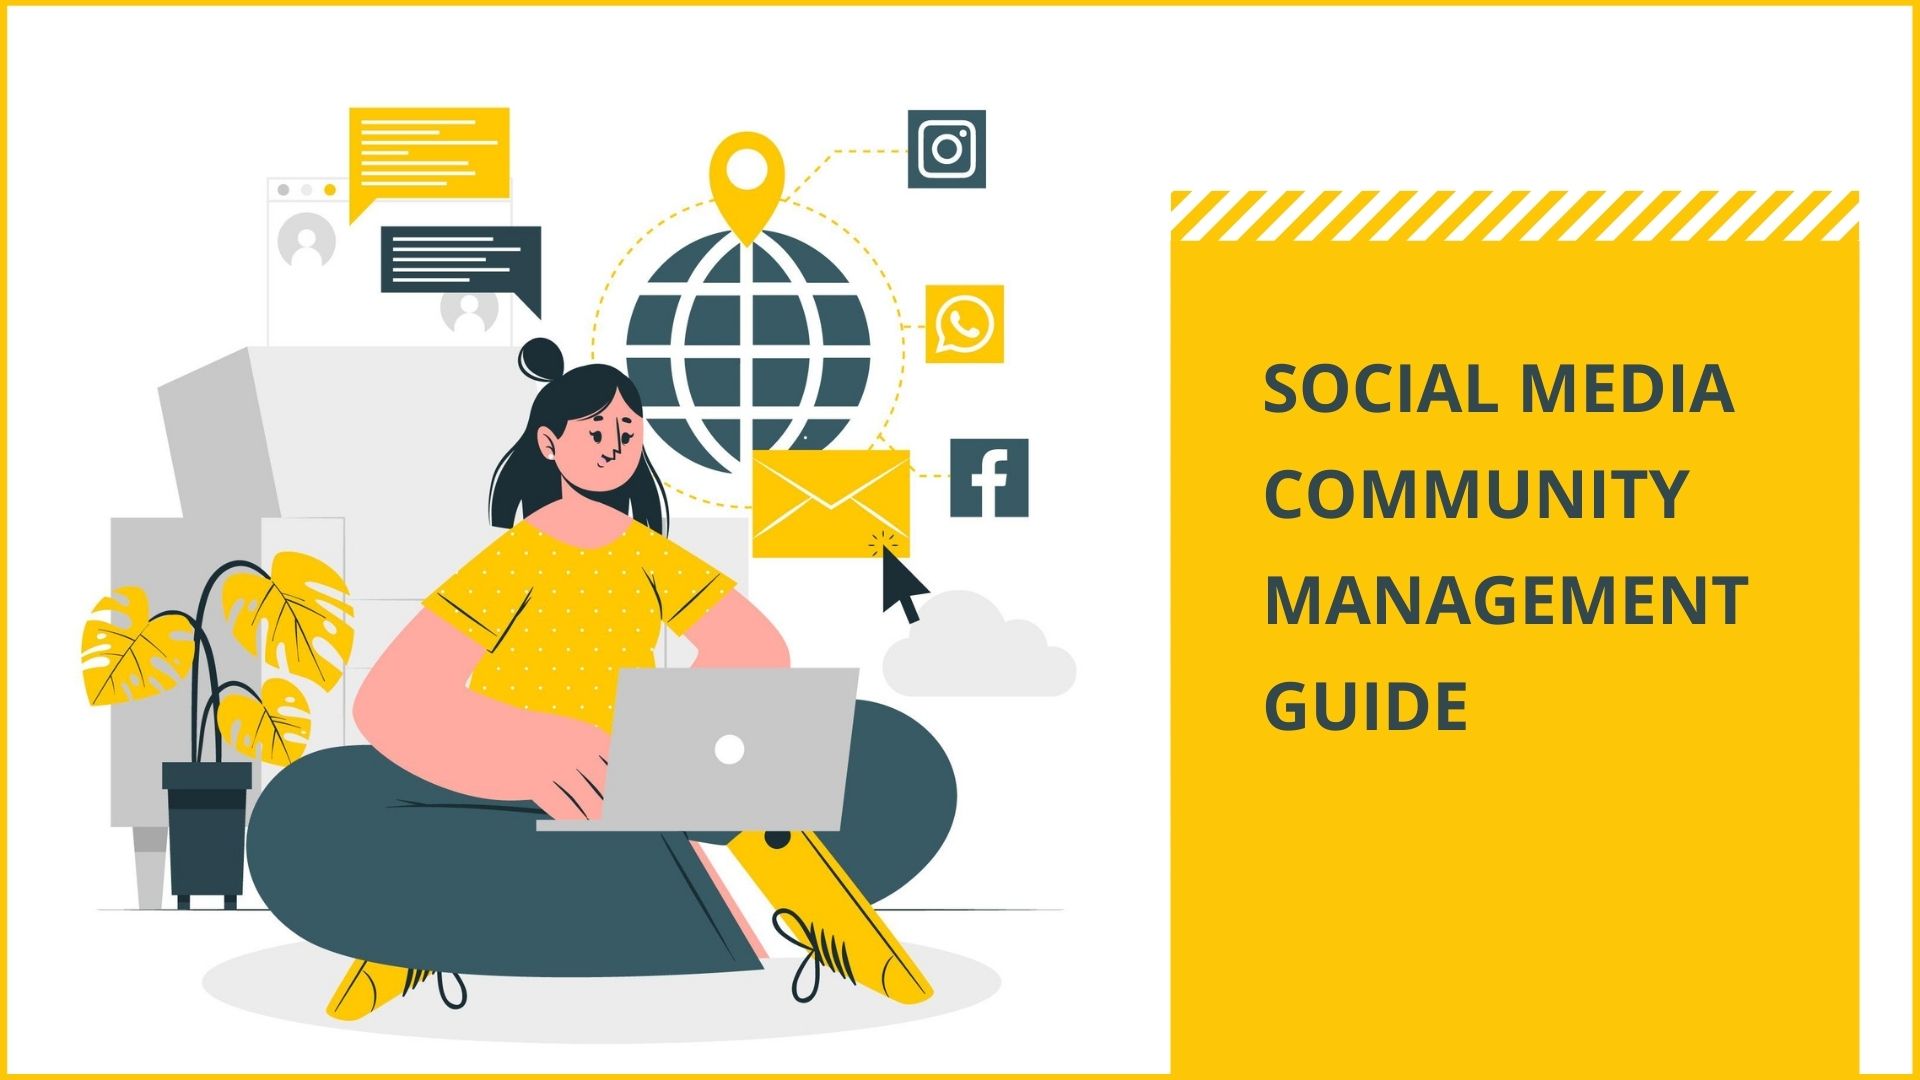 Community Management on Social Media